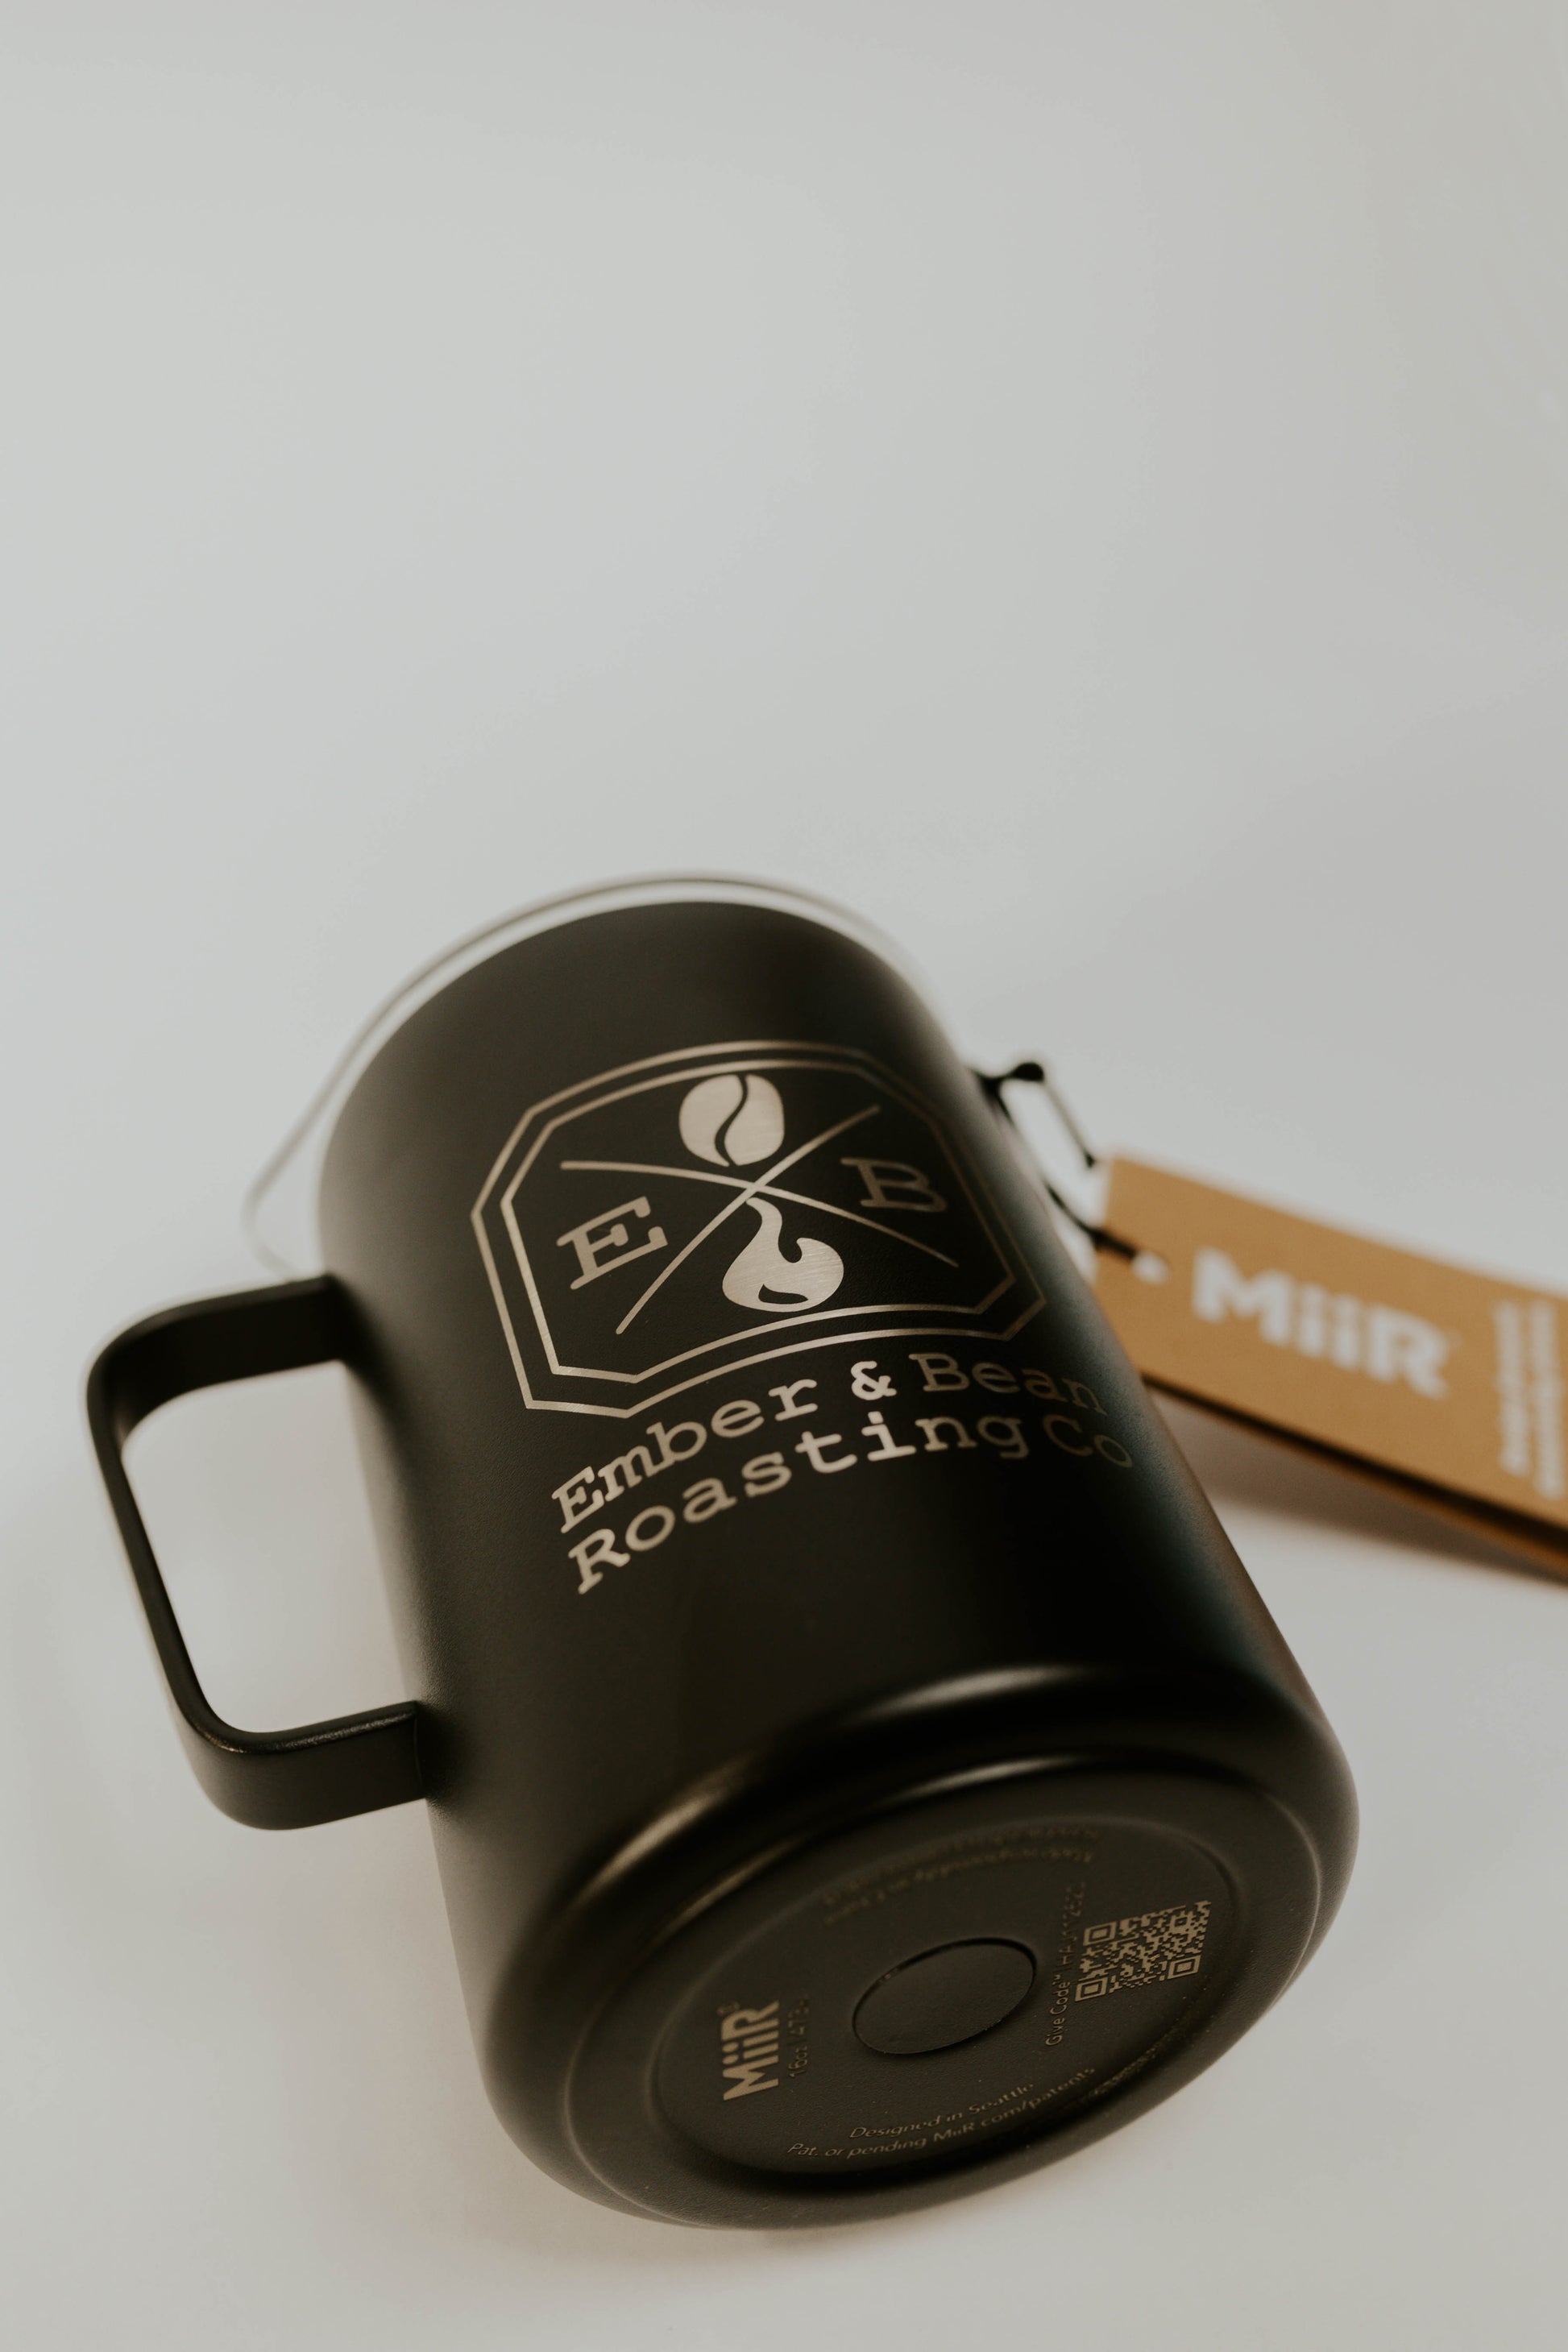 DOMA x MiiR - CAMP CUP 12oz – DOMA Coffee Roasting Company